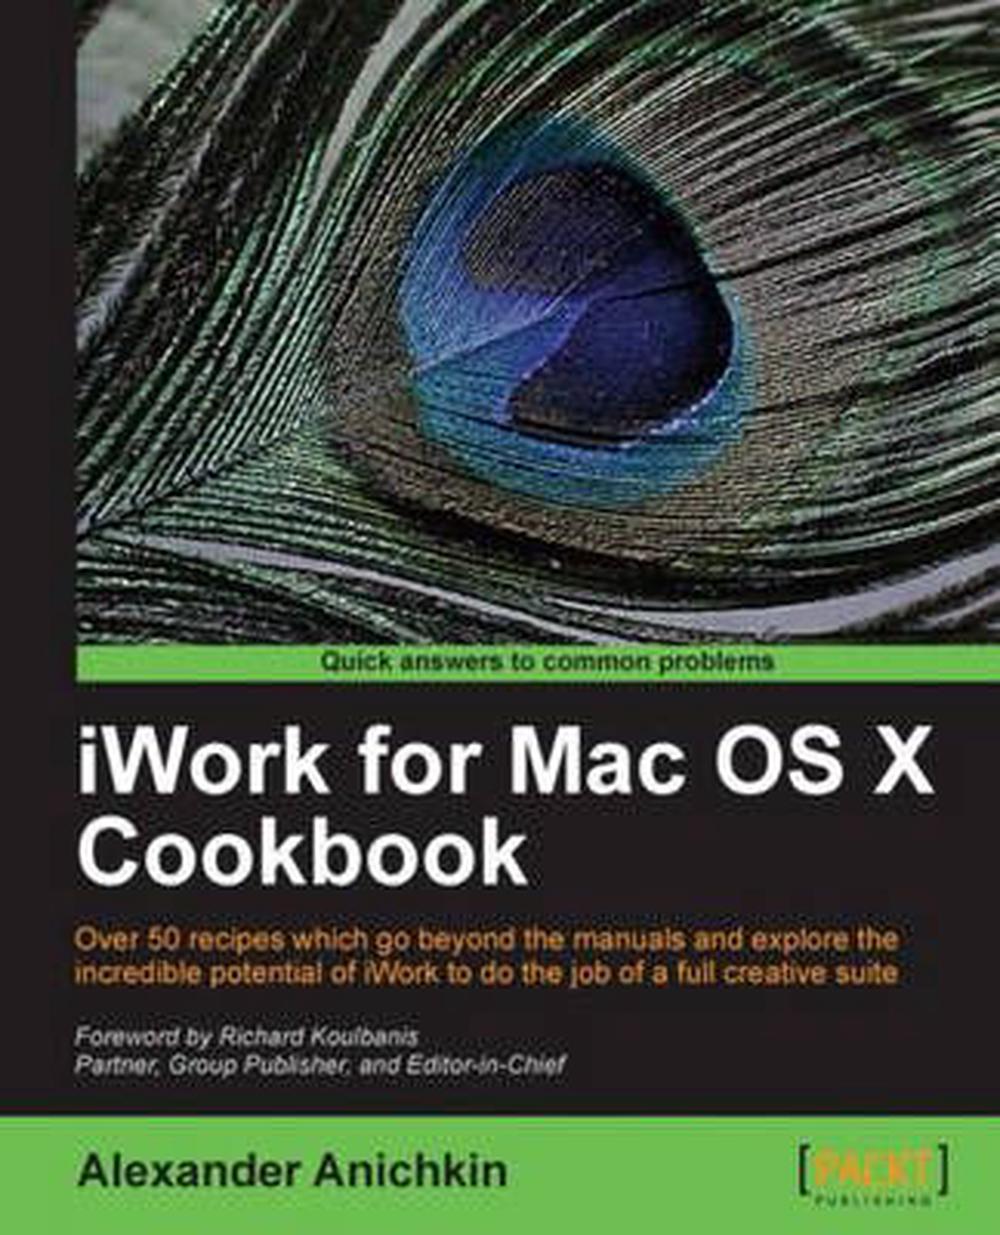 iwork for mac os 10.4.11